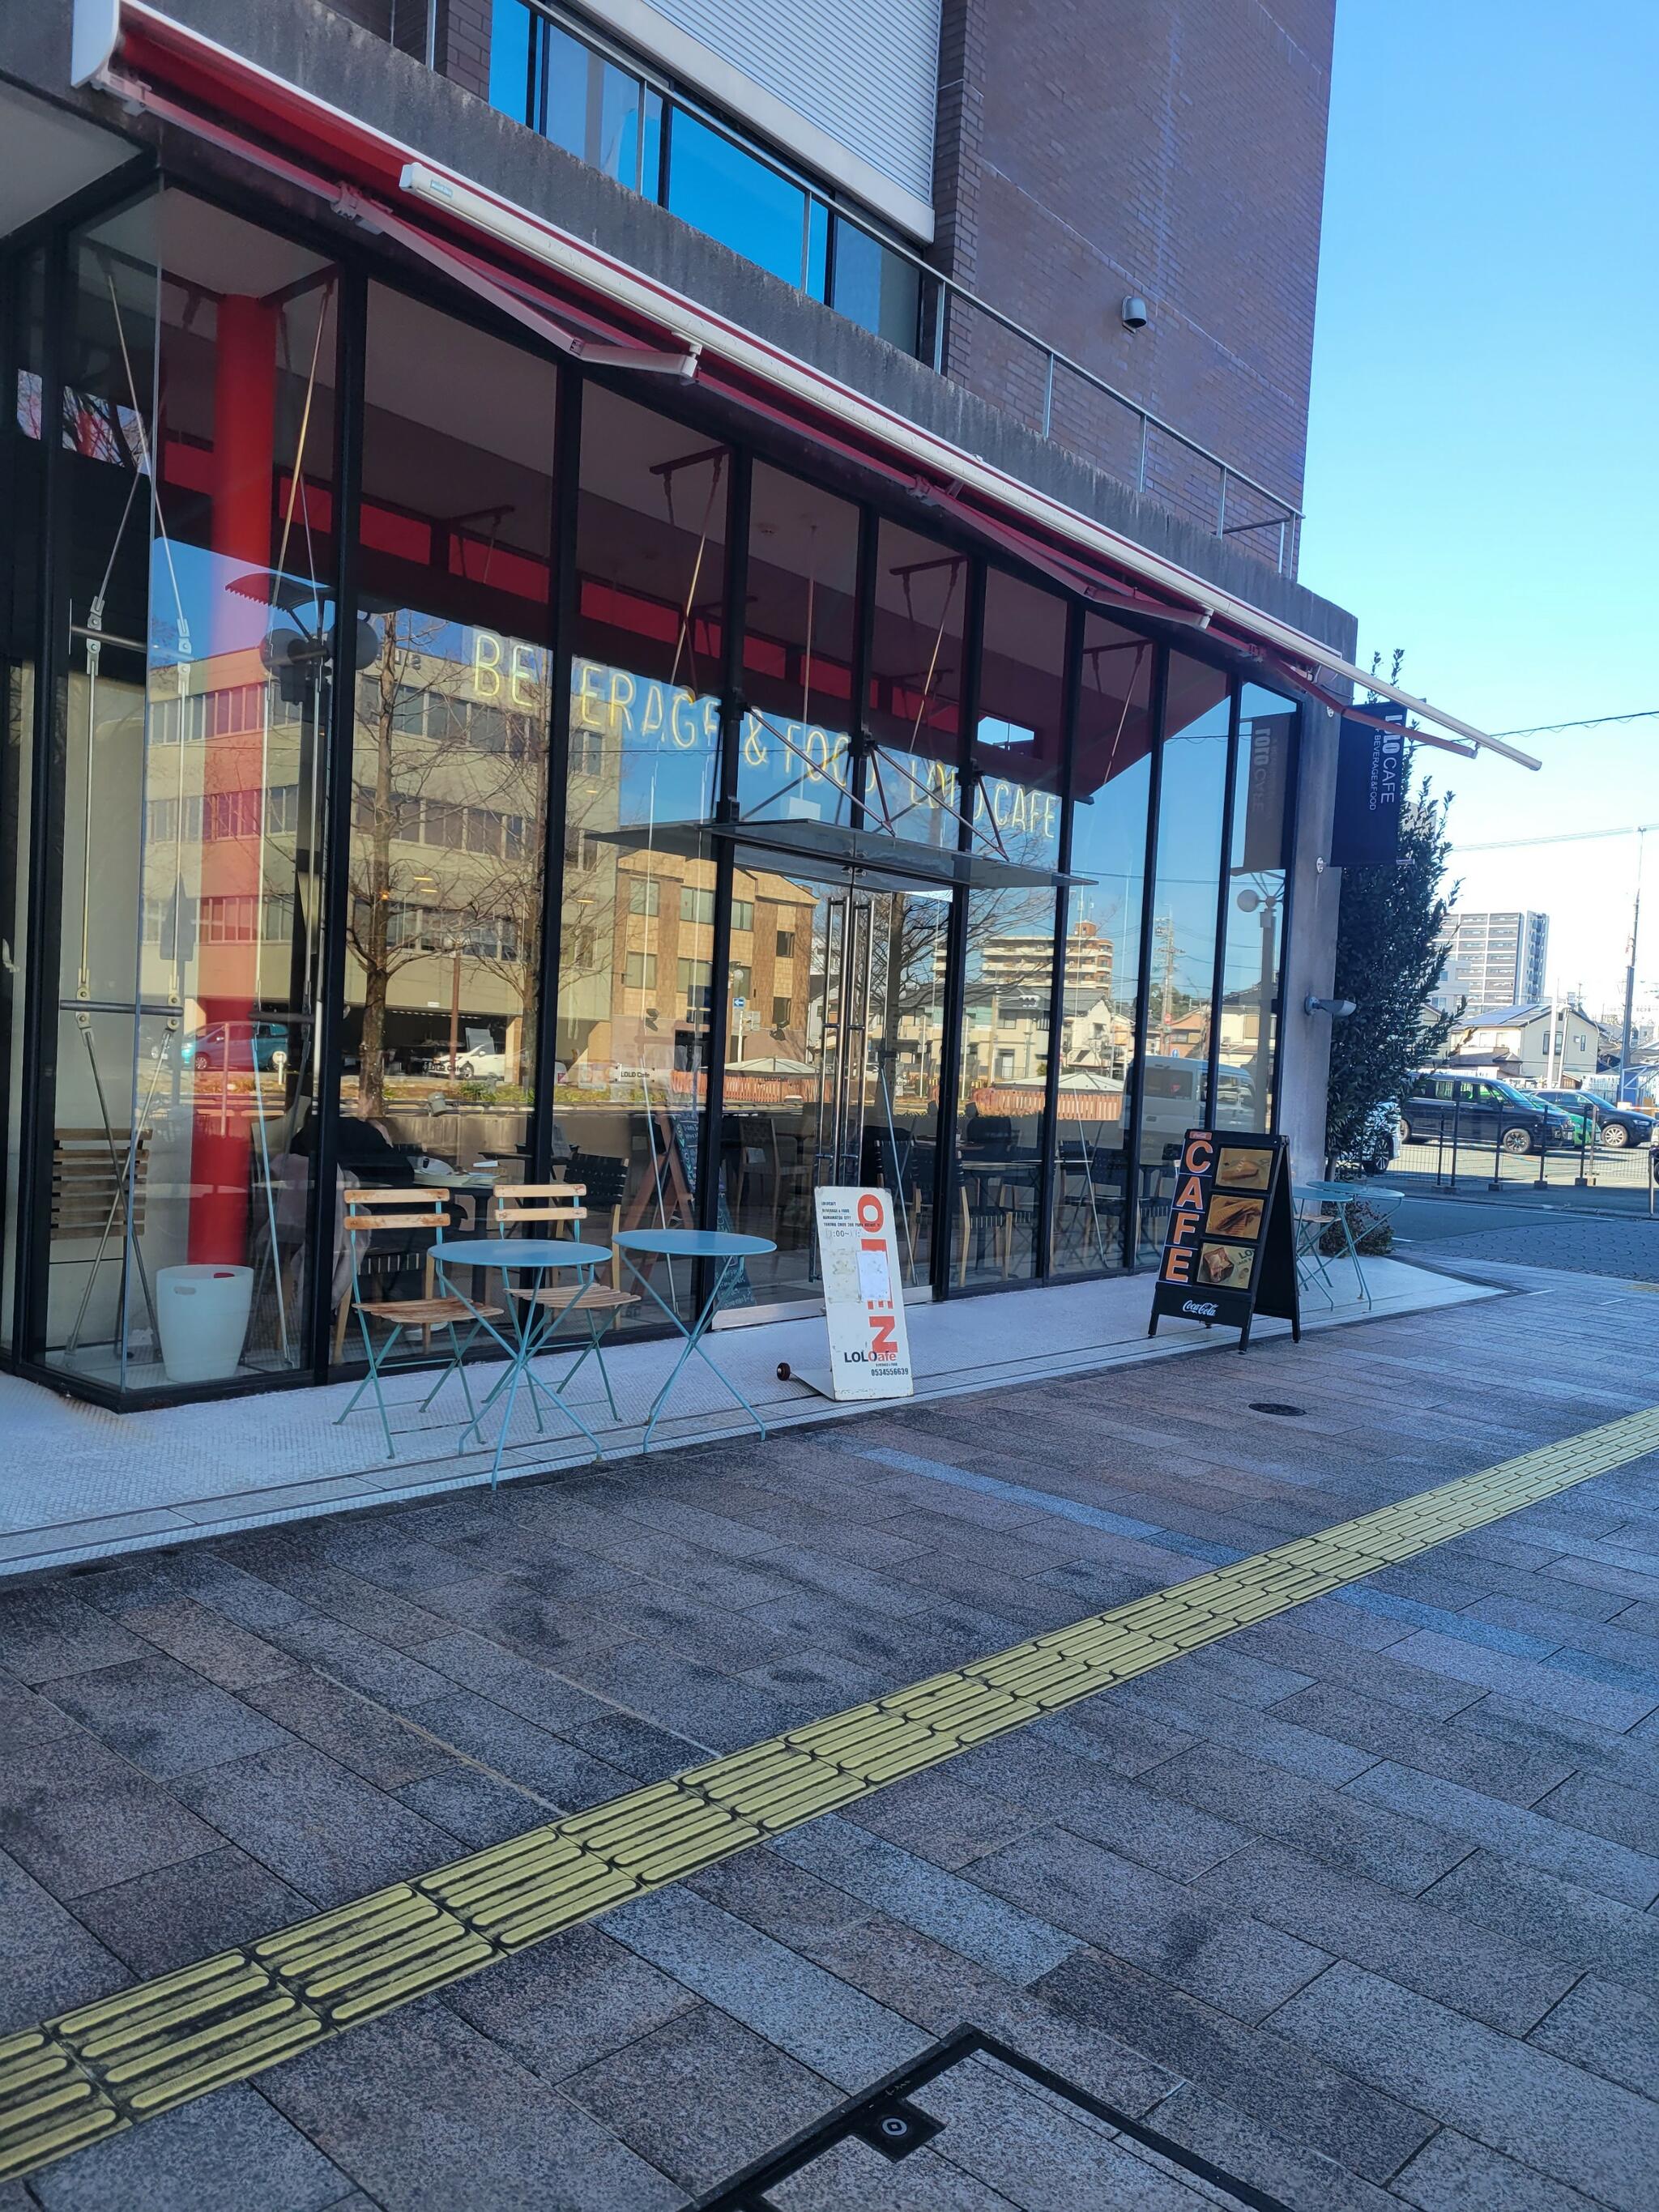 LOLO Cafe (ロロカフェ)の代表写真10